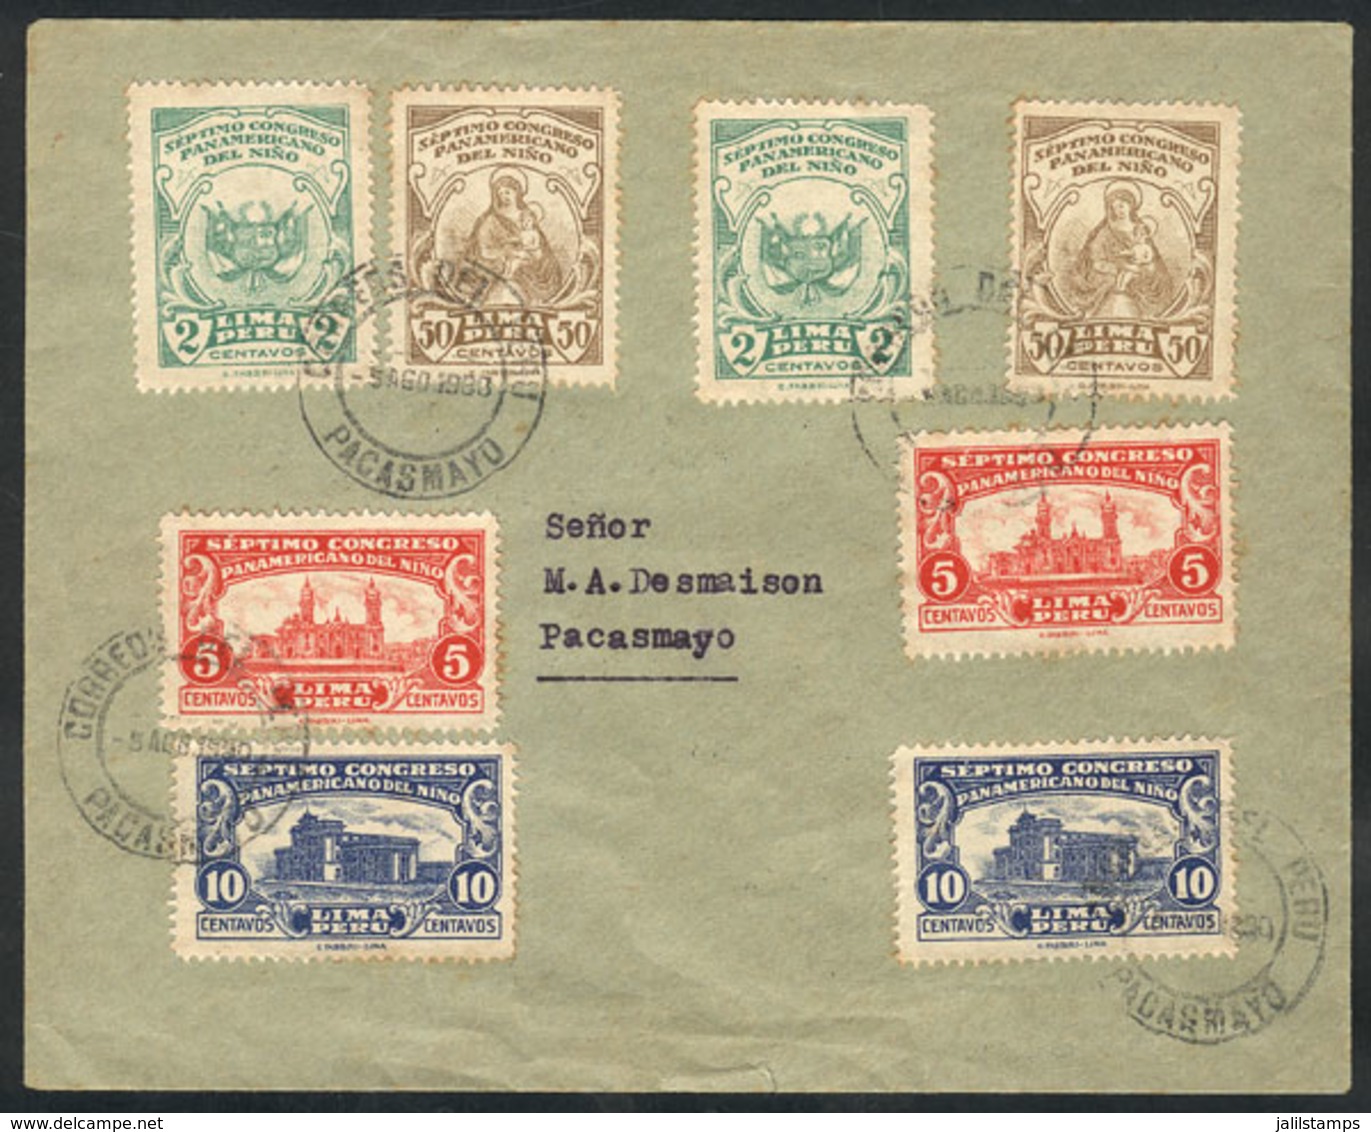 PERU: Cover Used In Pacasmayo On 5/AU/1933 With Nice Postage Of Sc.264/7 X2, VF! - Peru